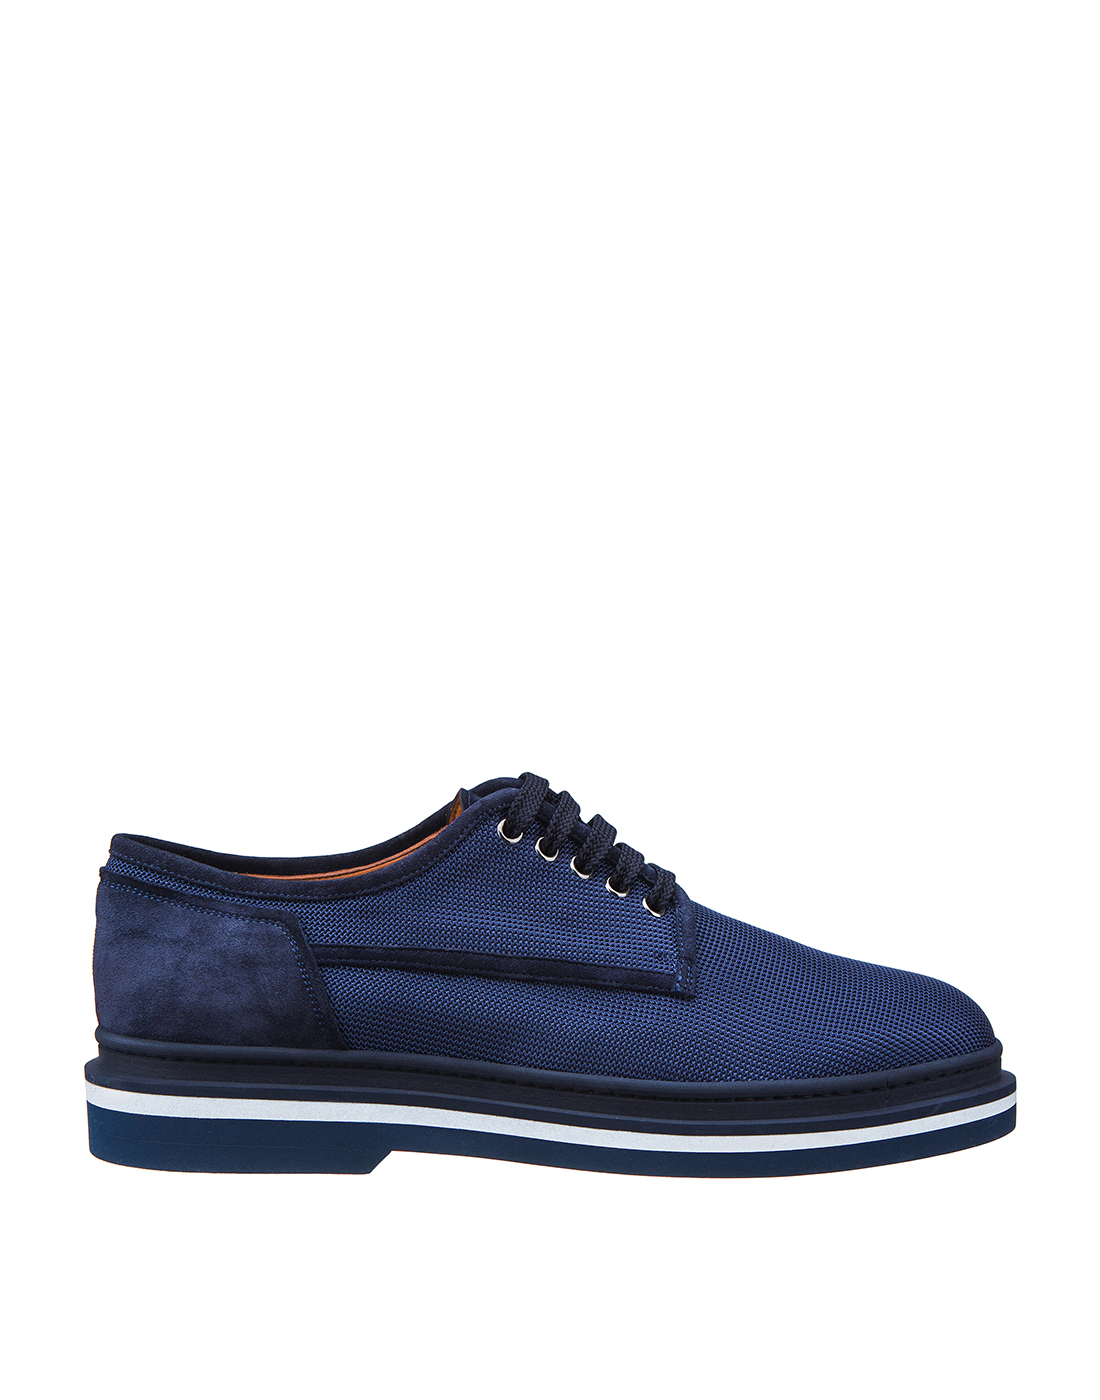 Туфли синие мужские Santoni S16673-1